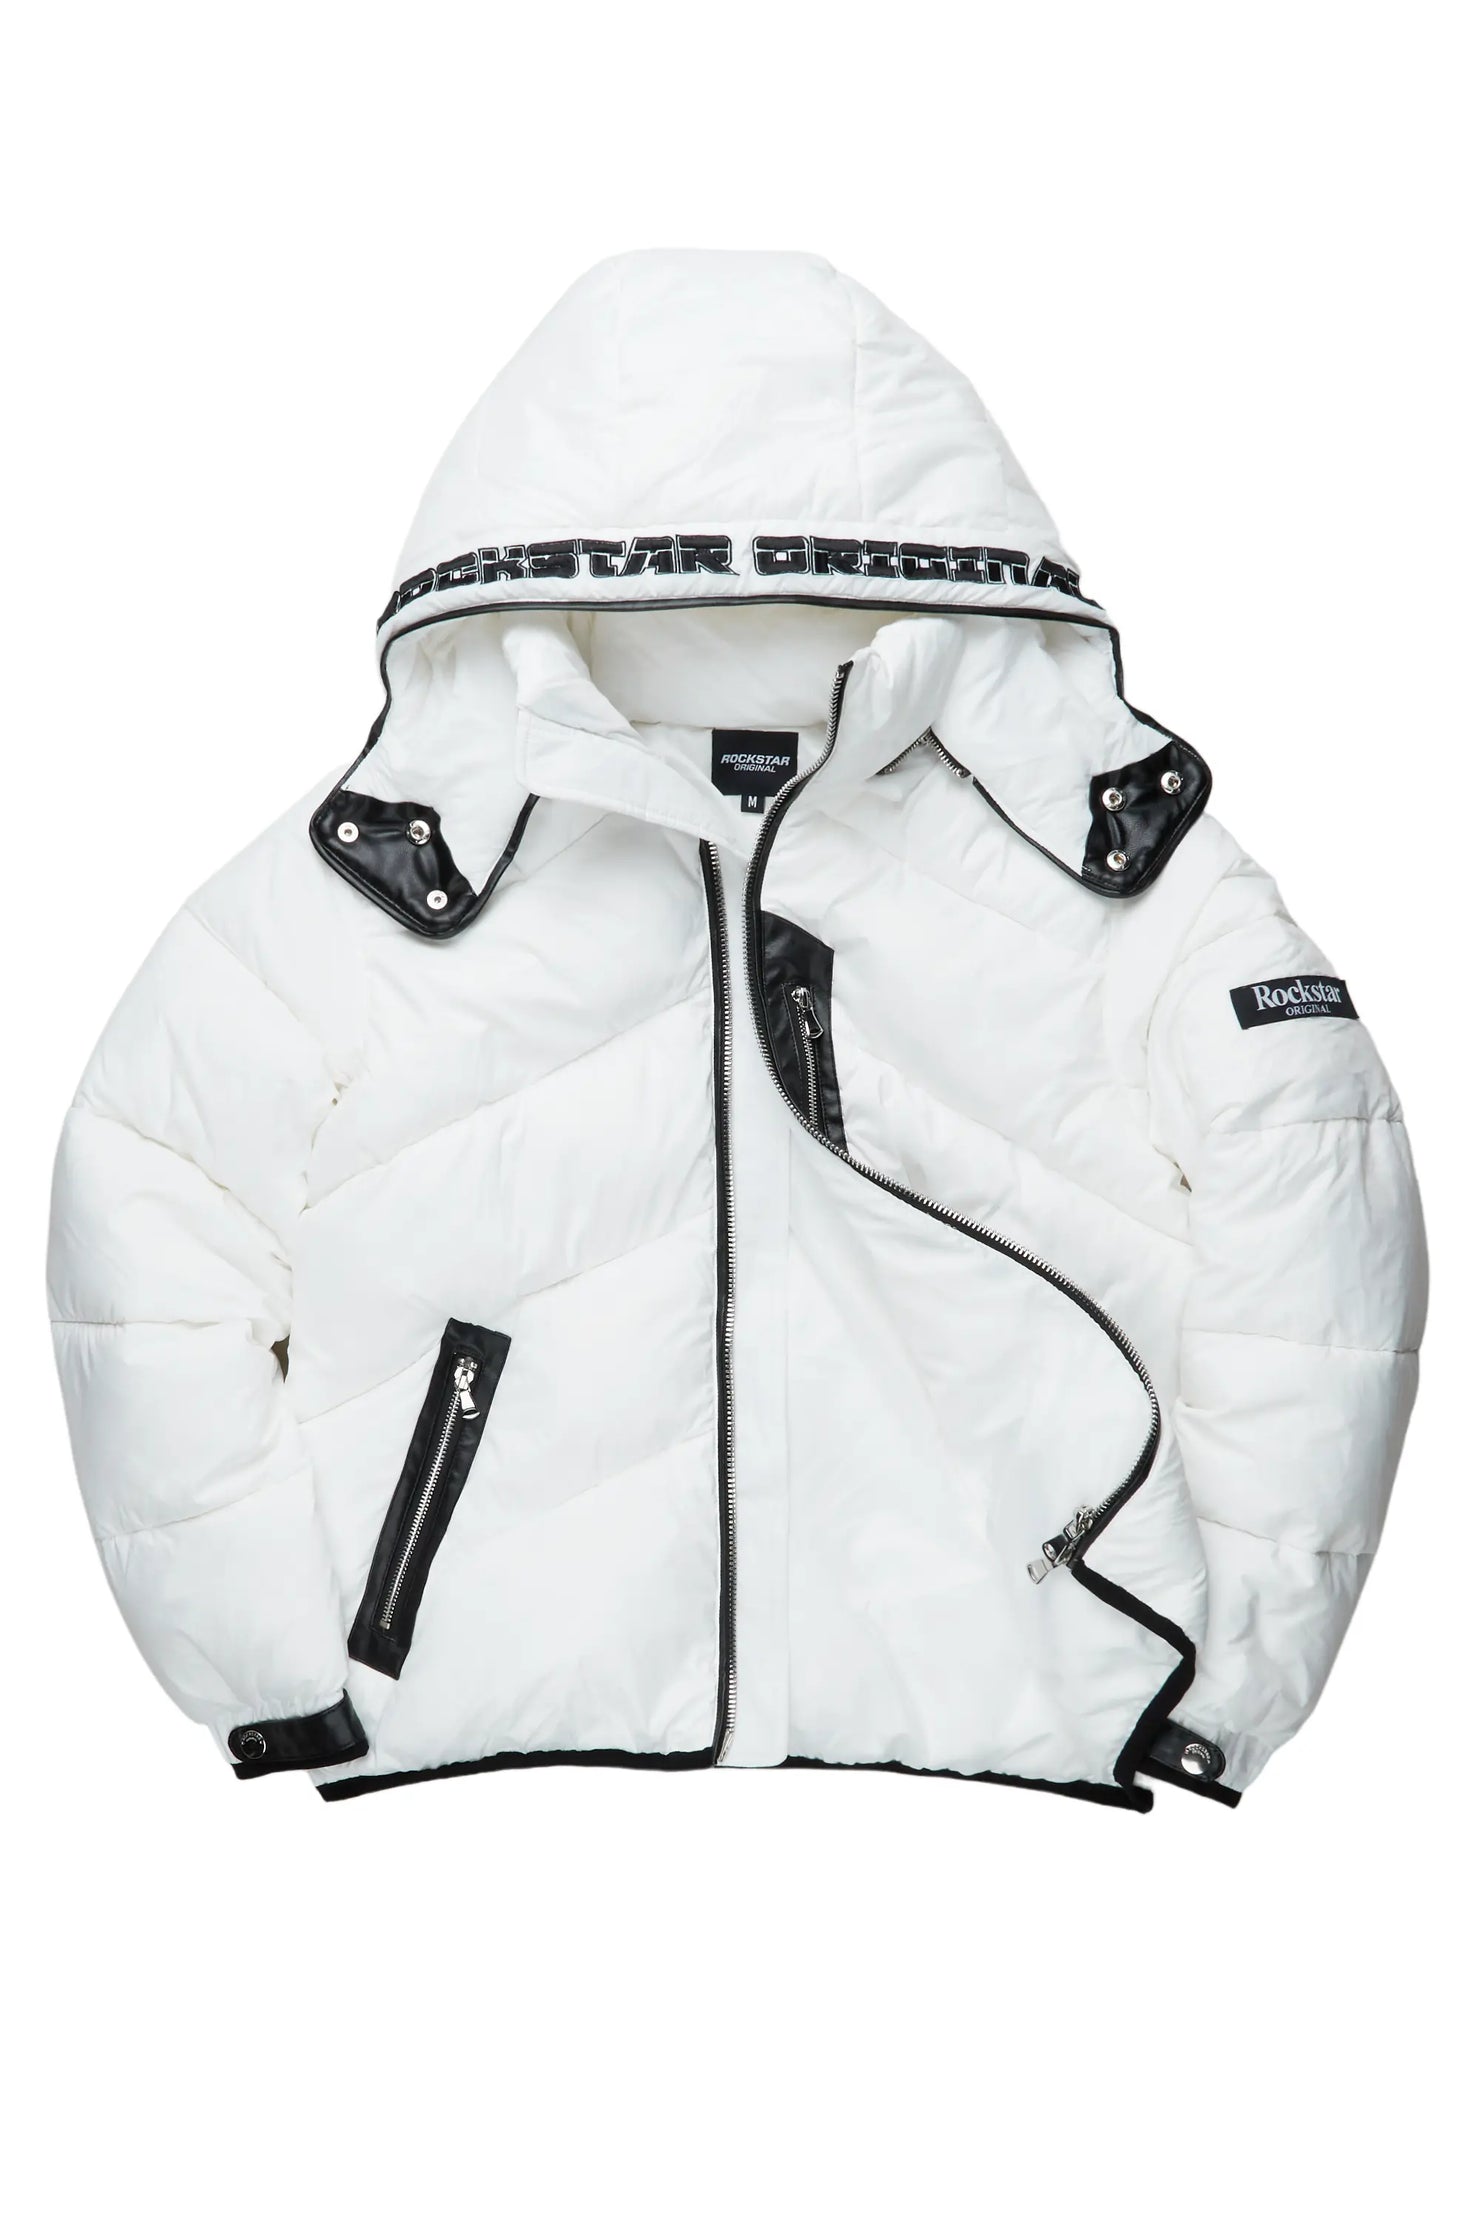 Ransom White Puffer Jacket– Rockstar Original